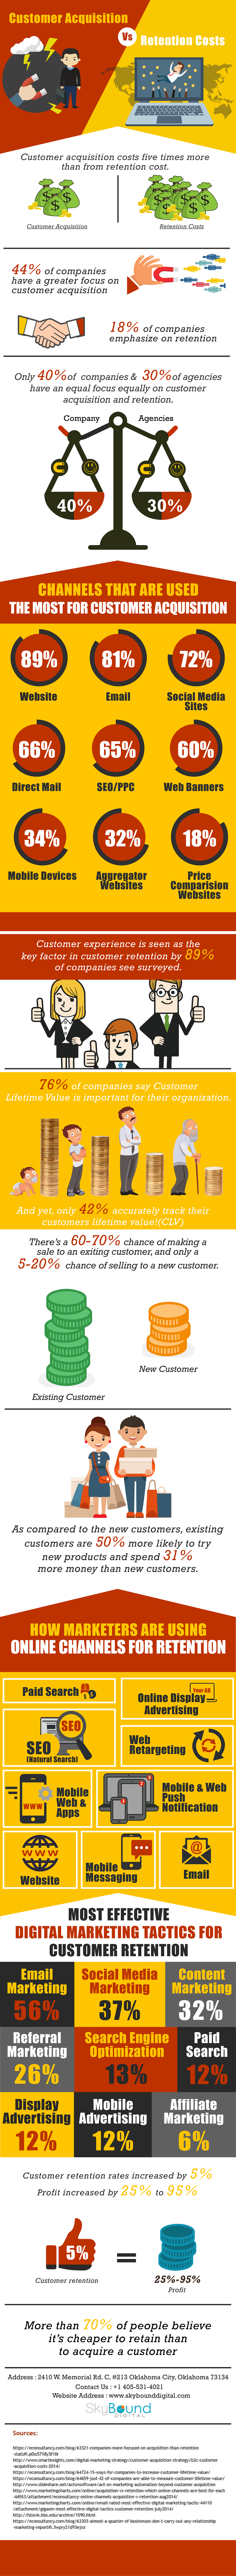 customer acquisition vs retention costs